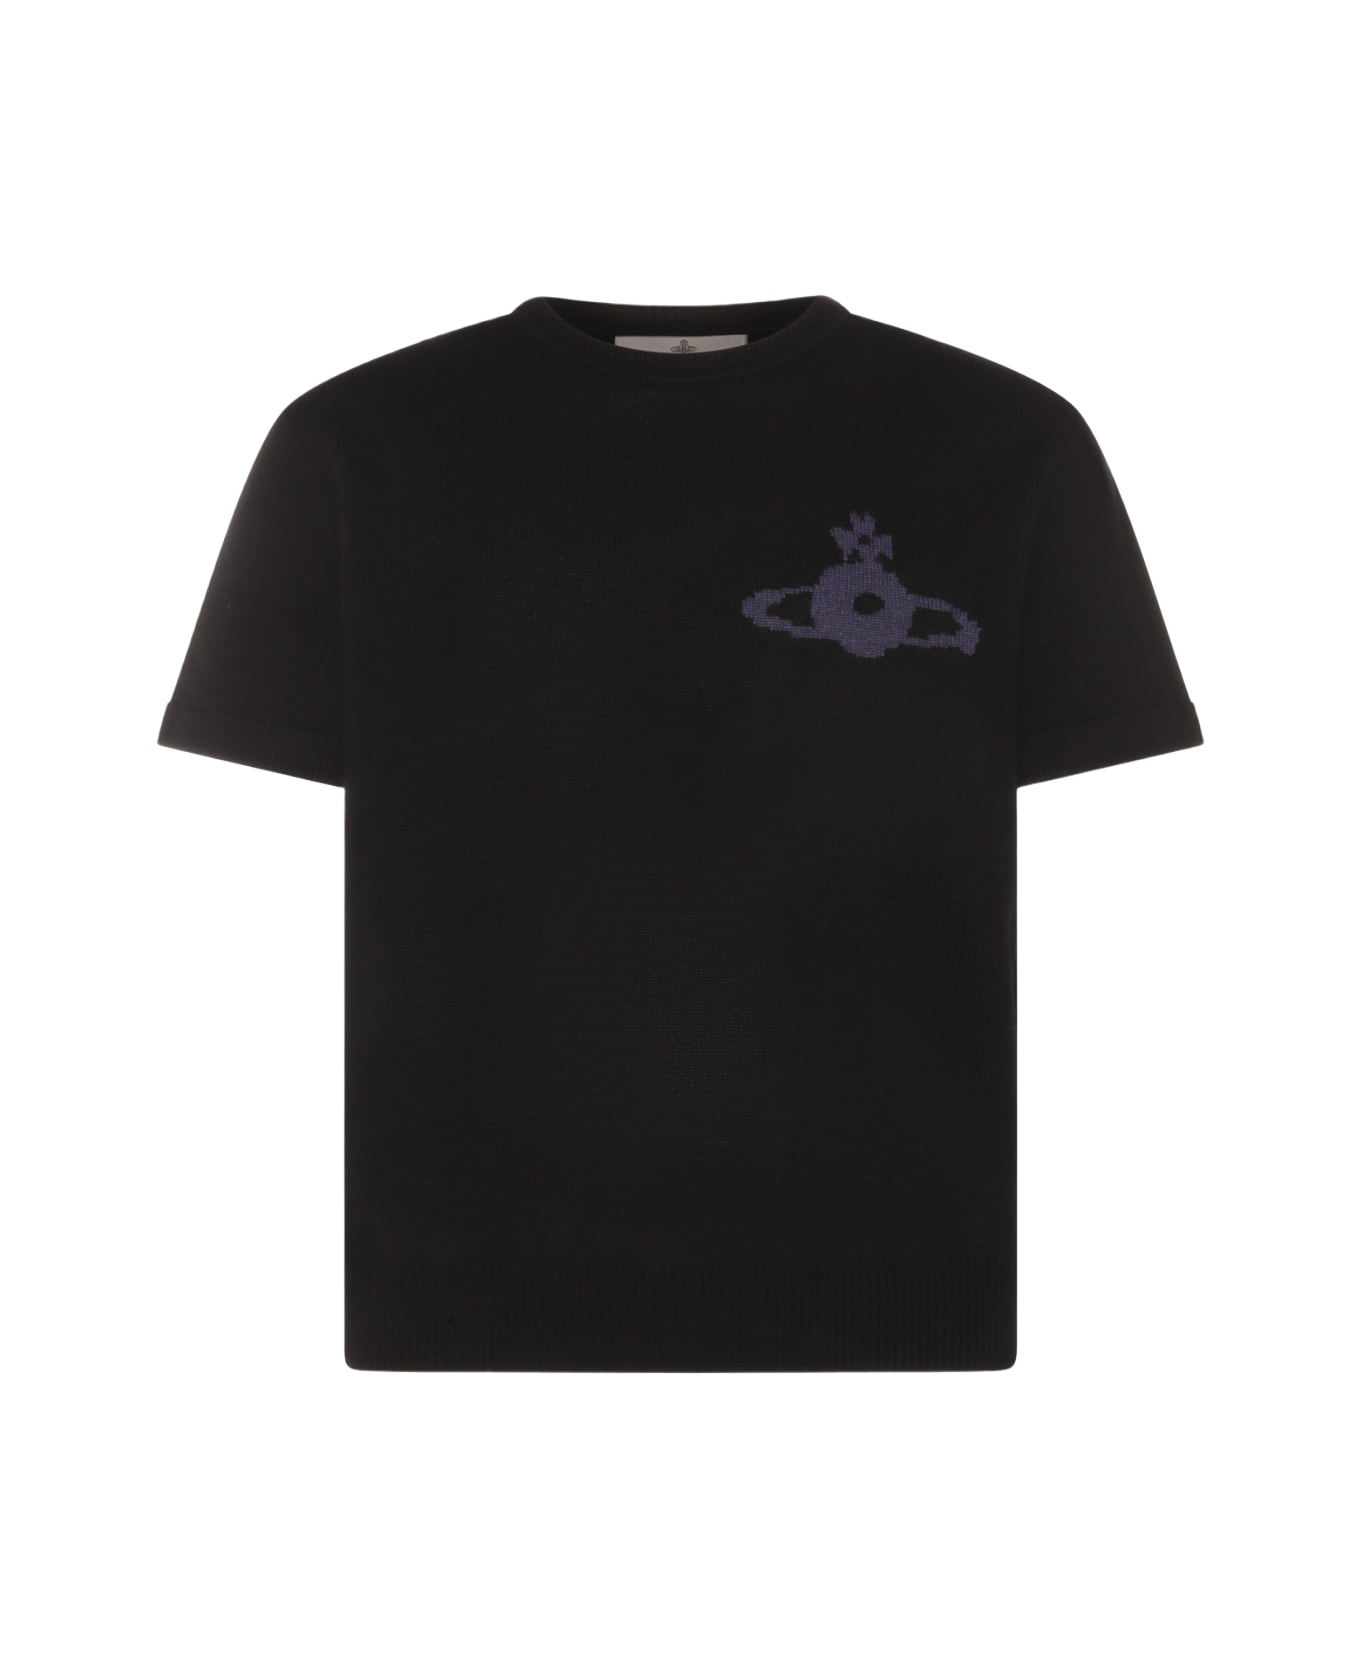 Vivienne Westwood Black T-shirt - Black